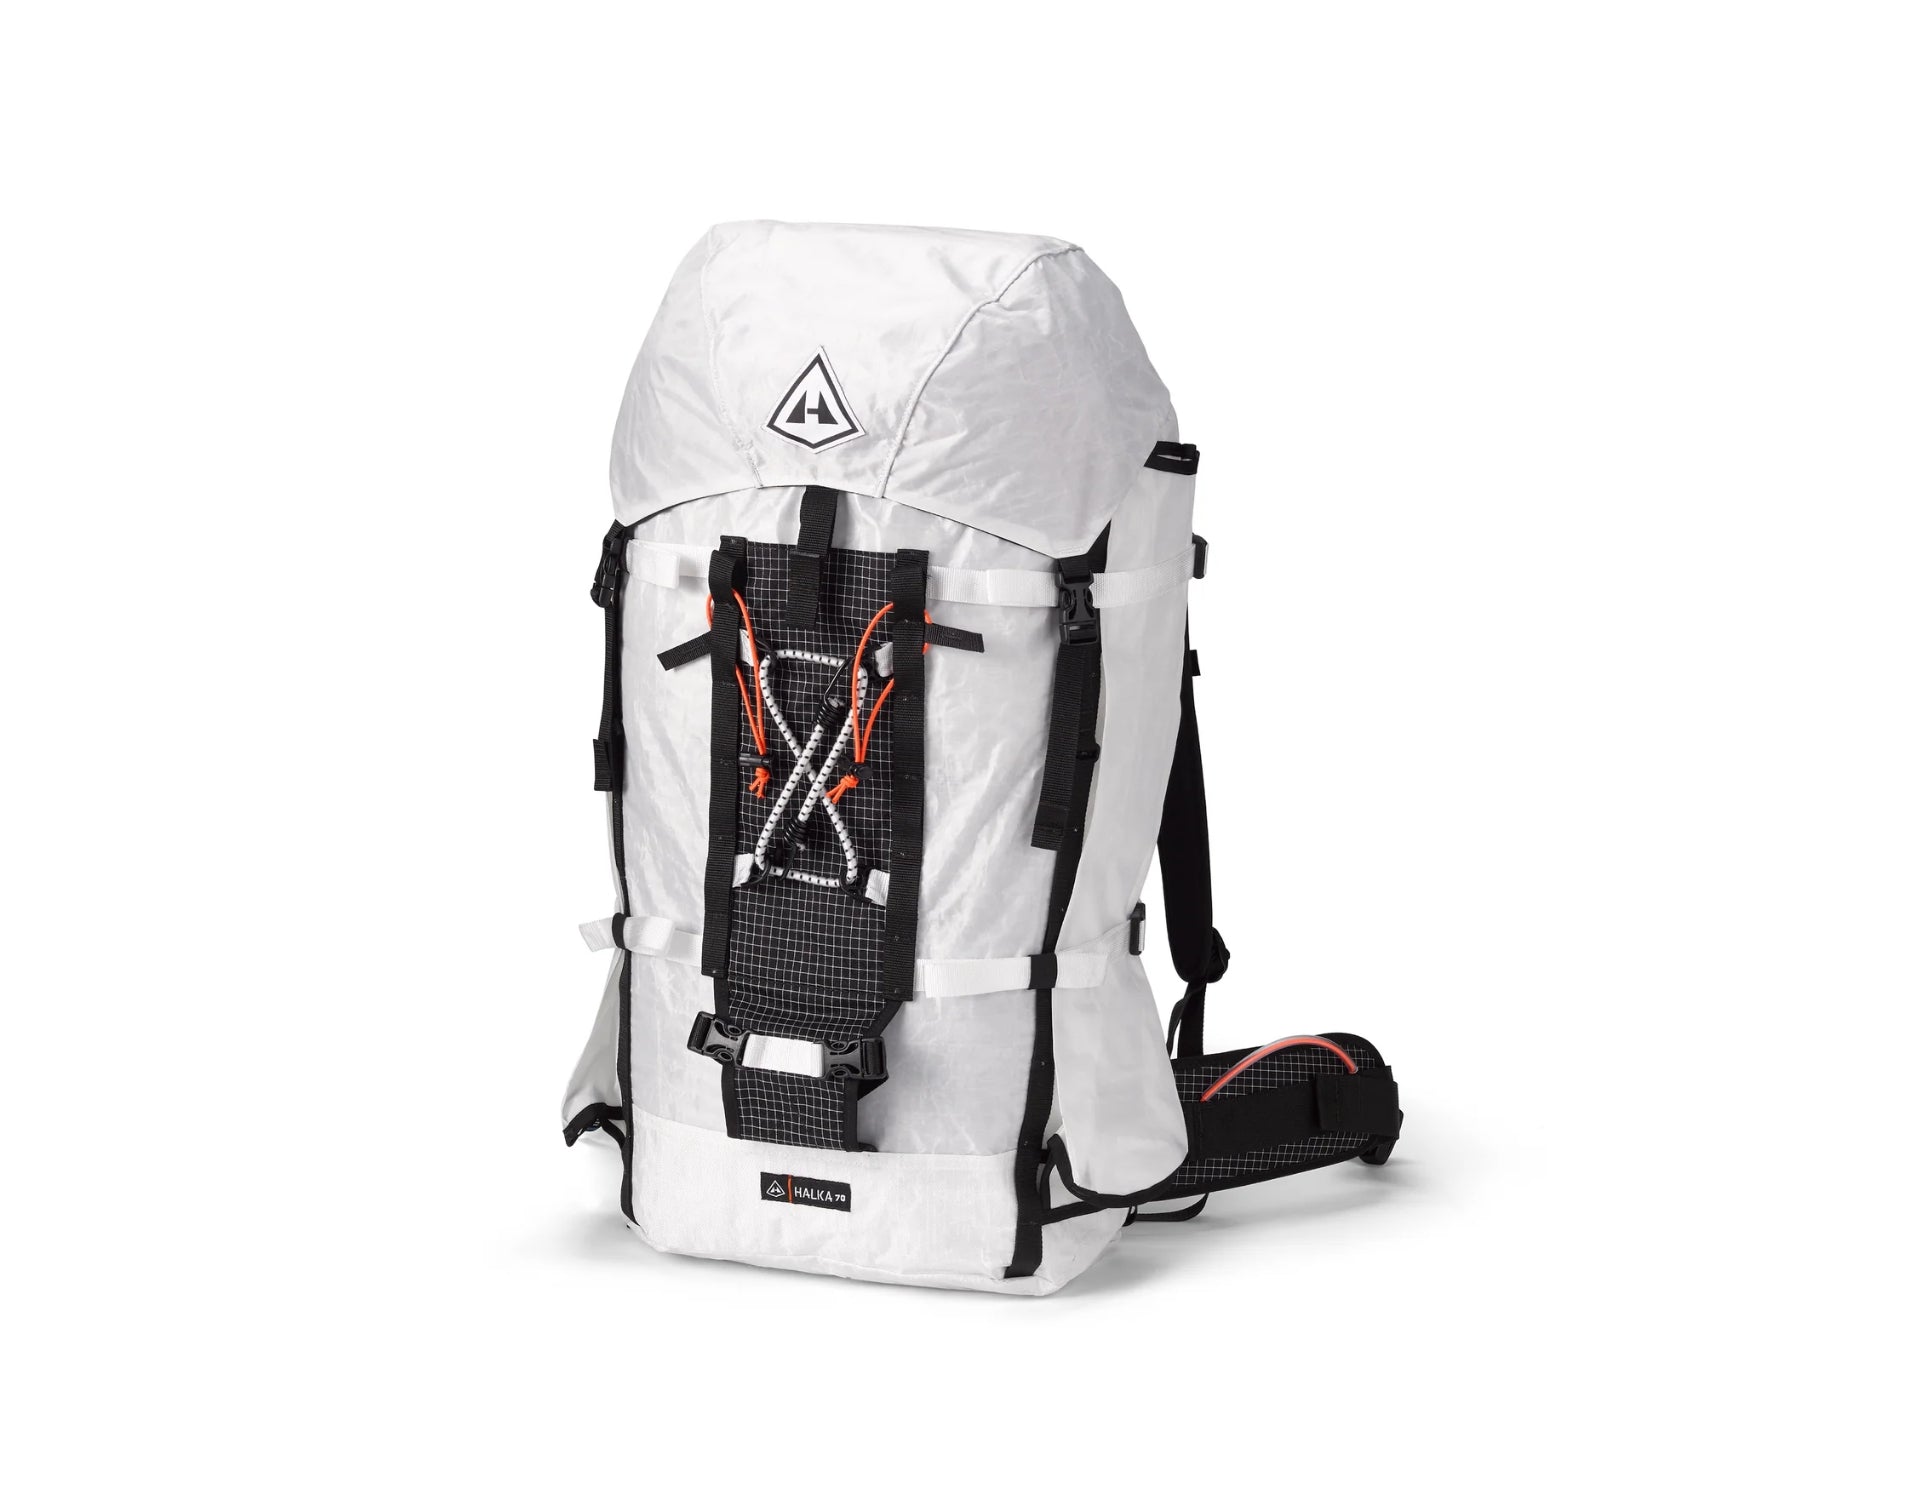 Hyperlite Mountain Gear Halka 70 Backpack in White